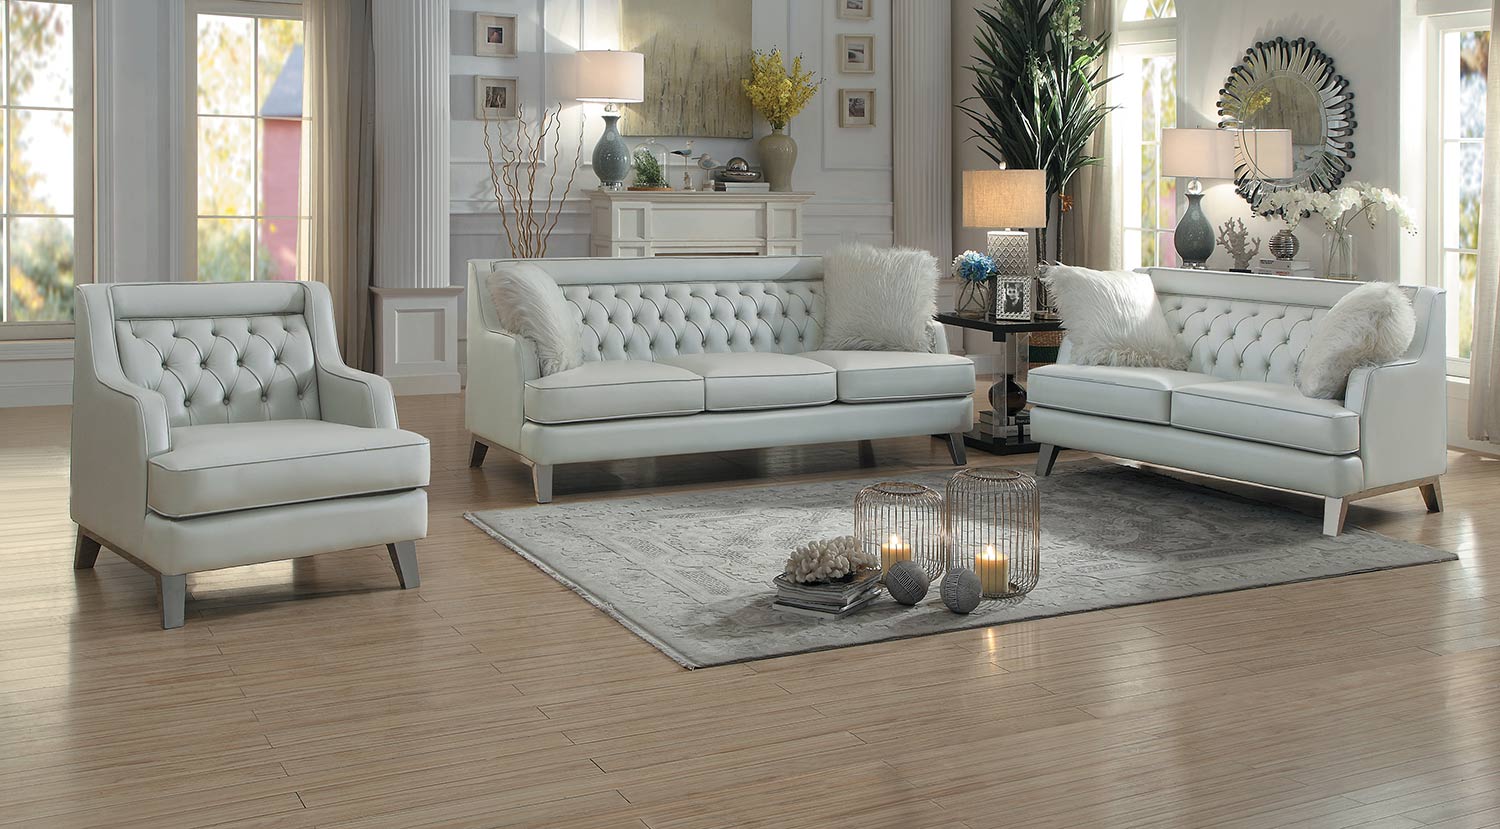 Homelegance Nevaun Sofa Set - Light gray AireHyde